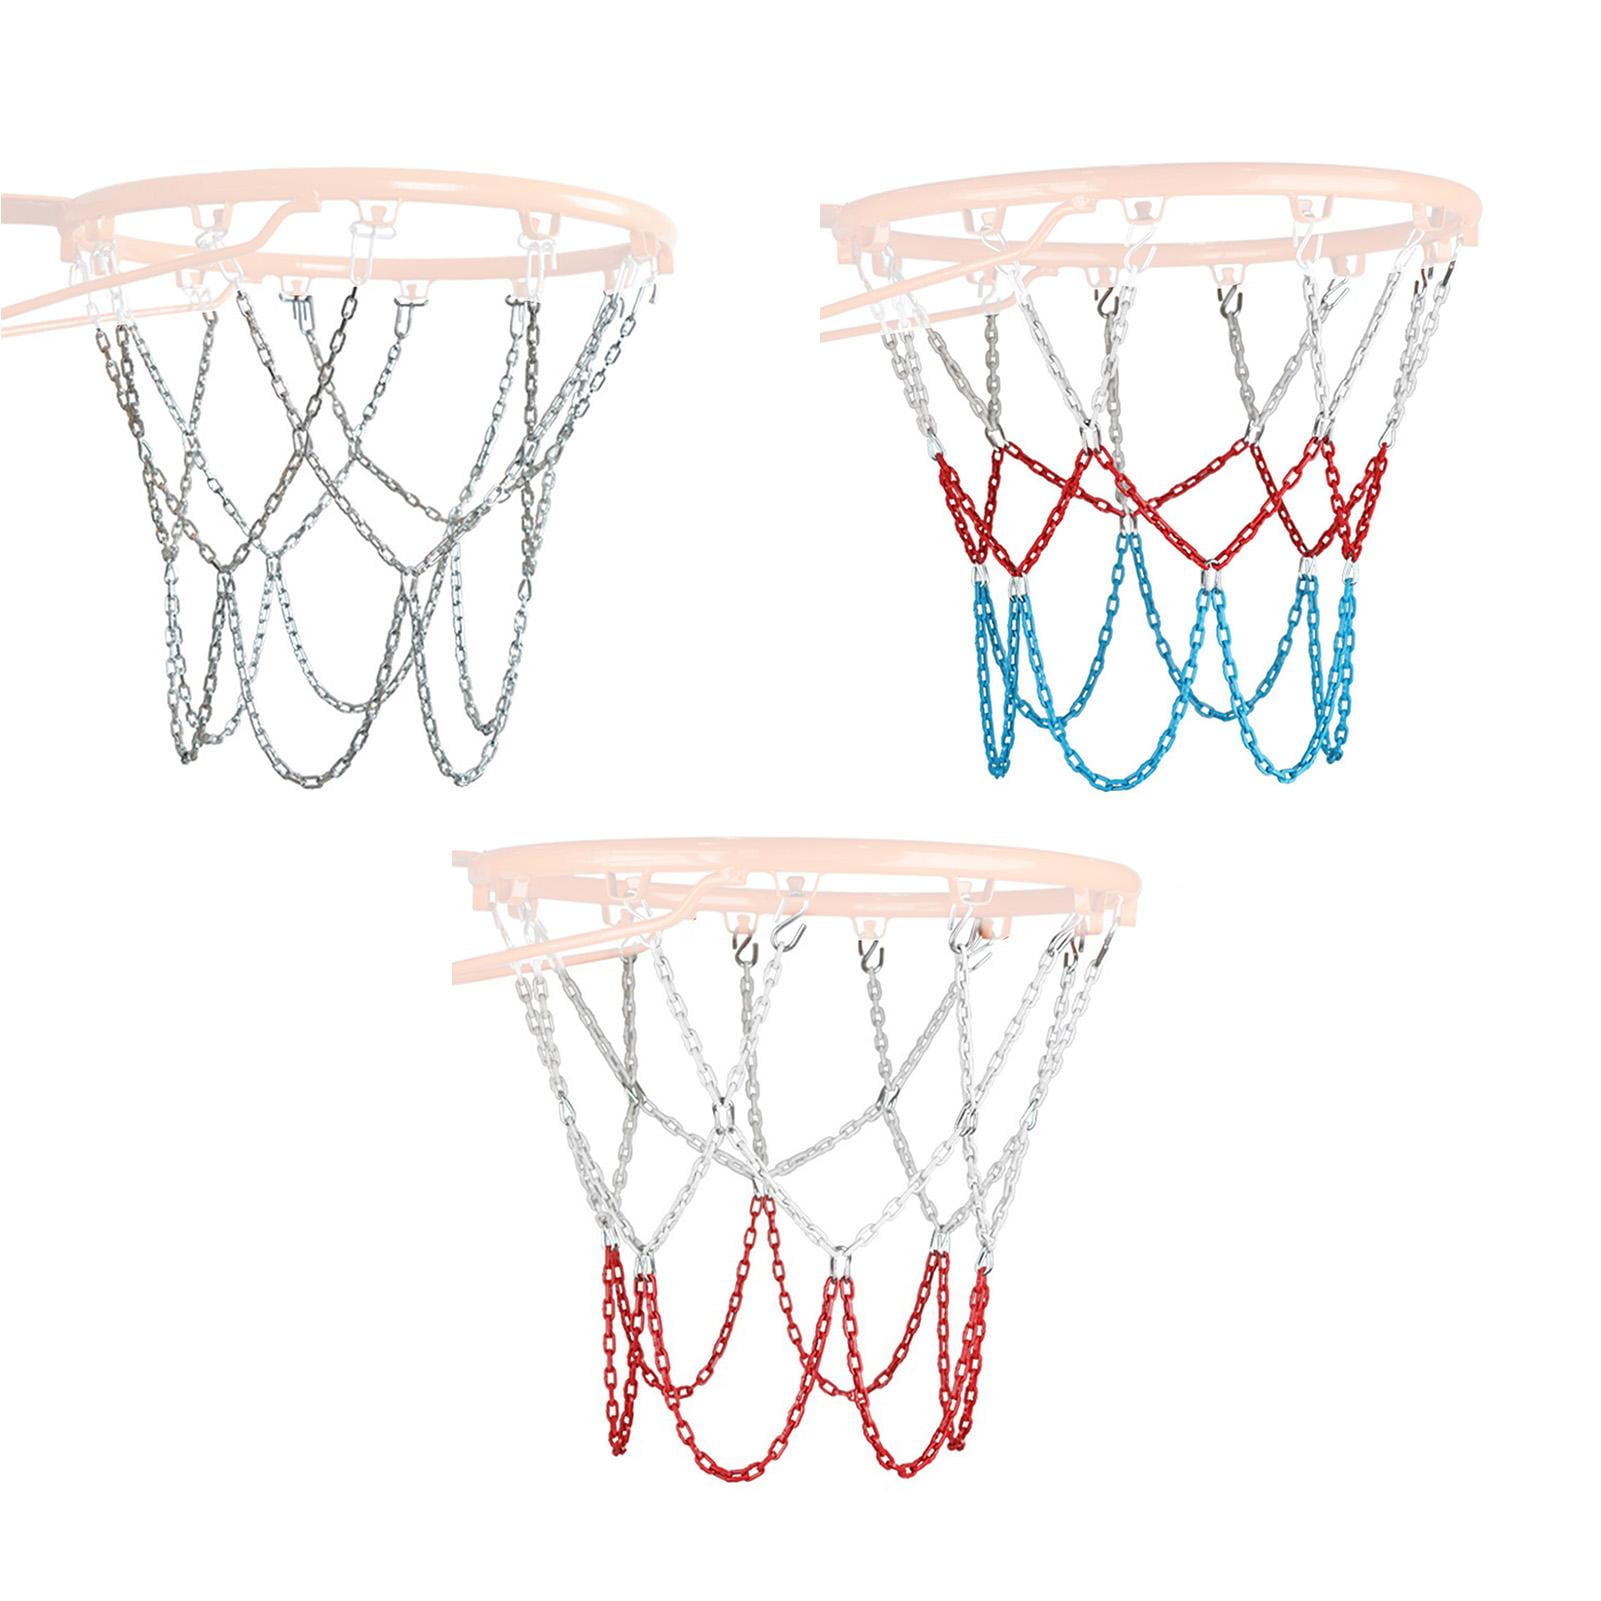 Nets easy